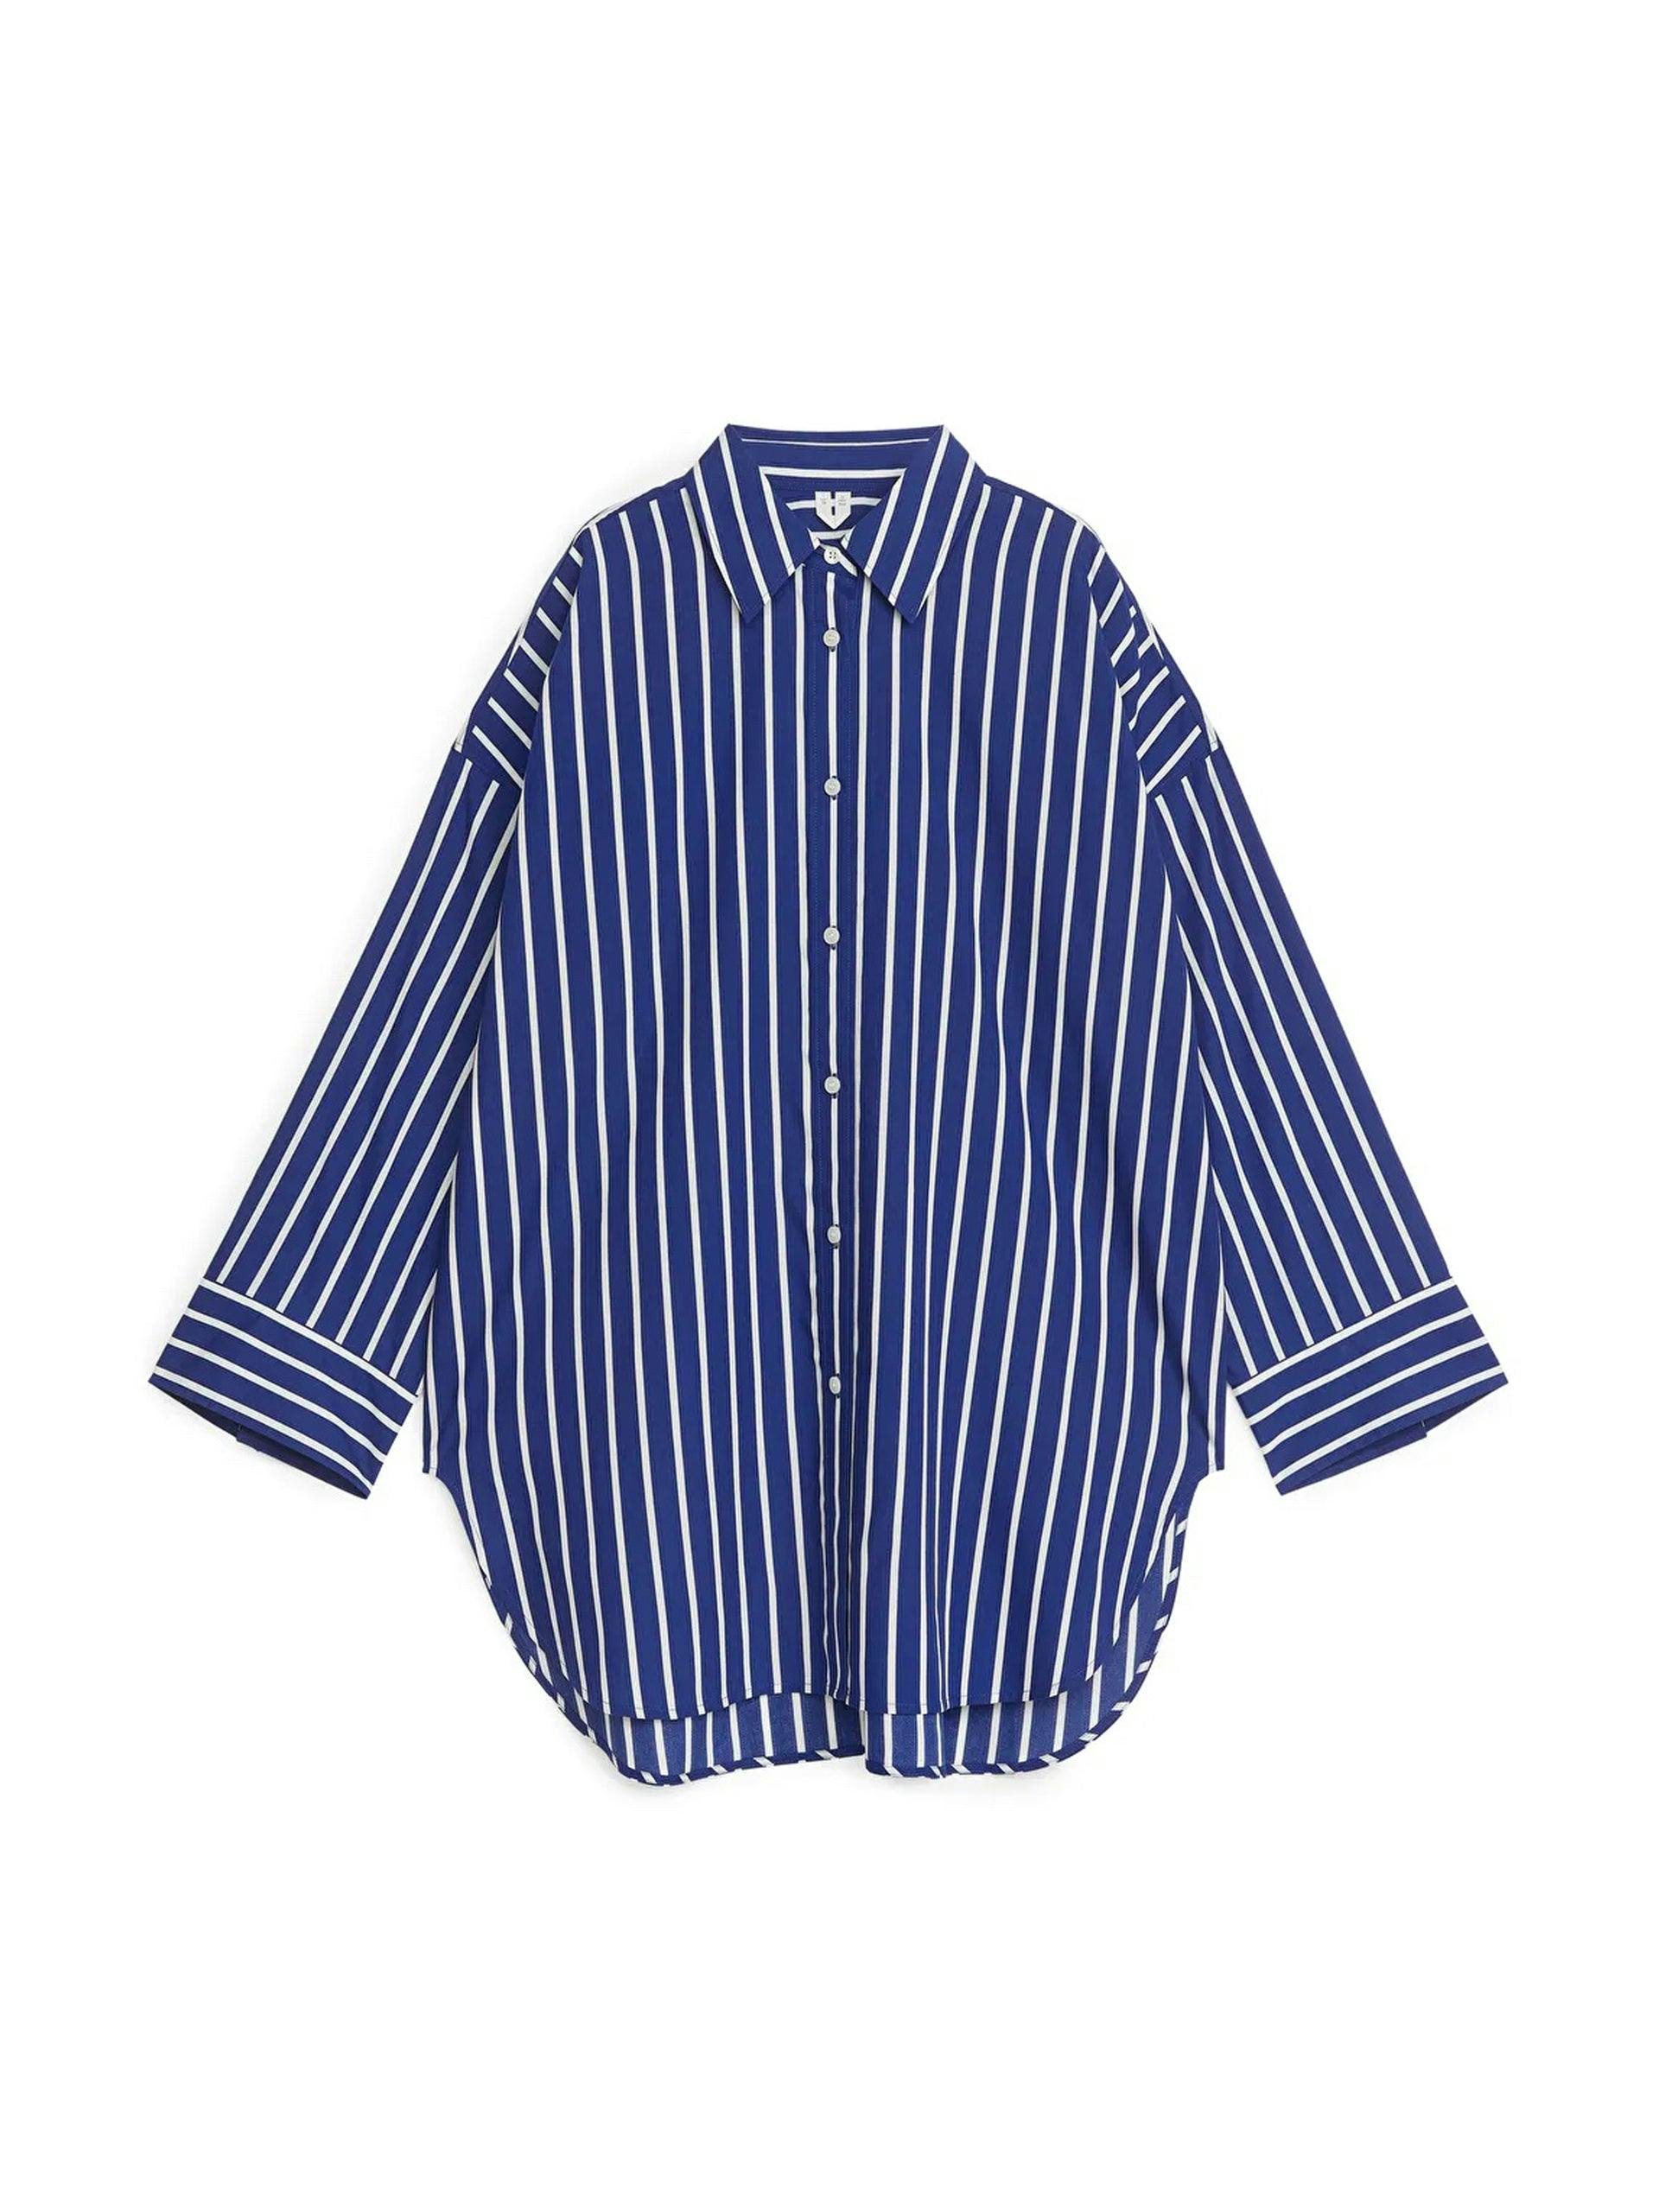 Oversized blue stripe shirt